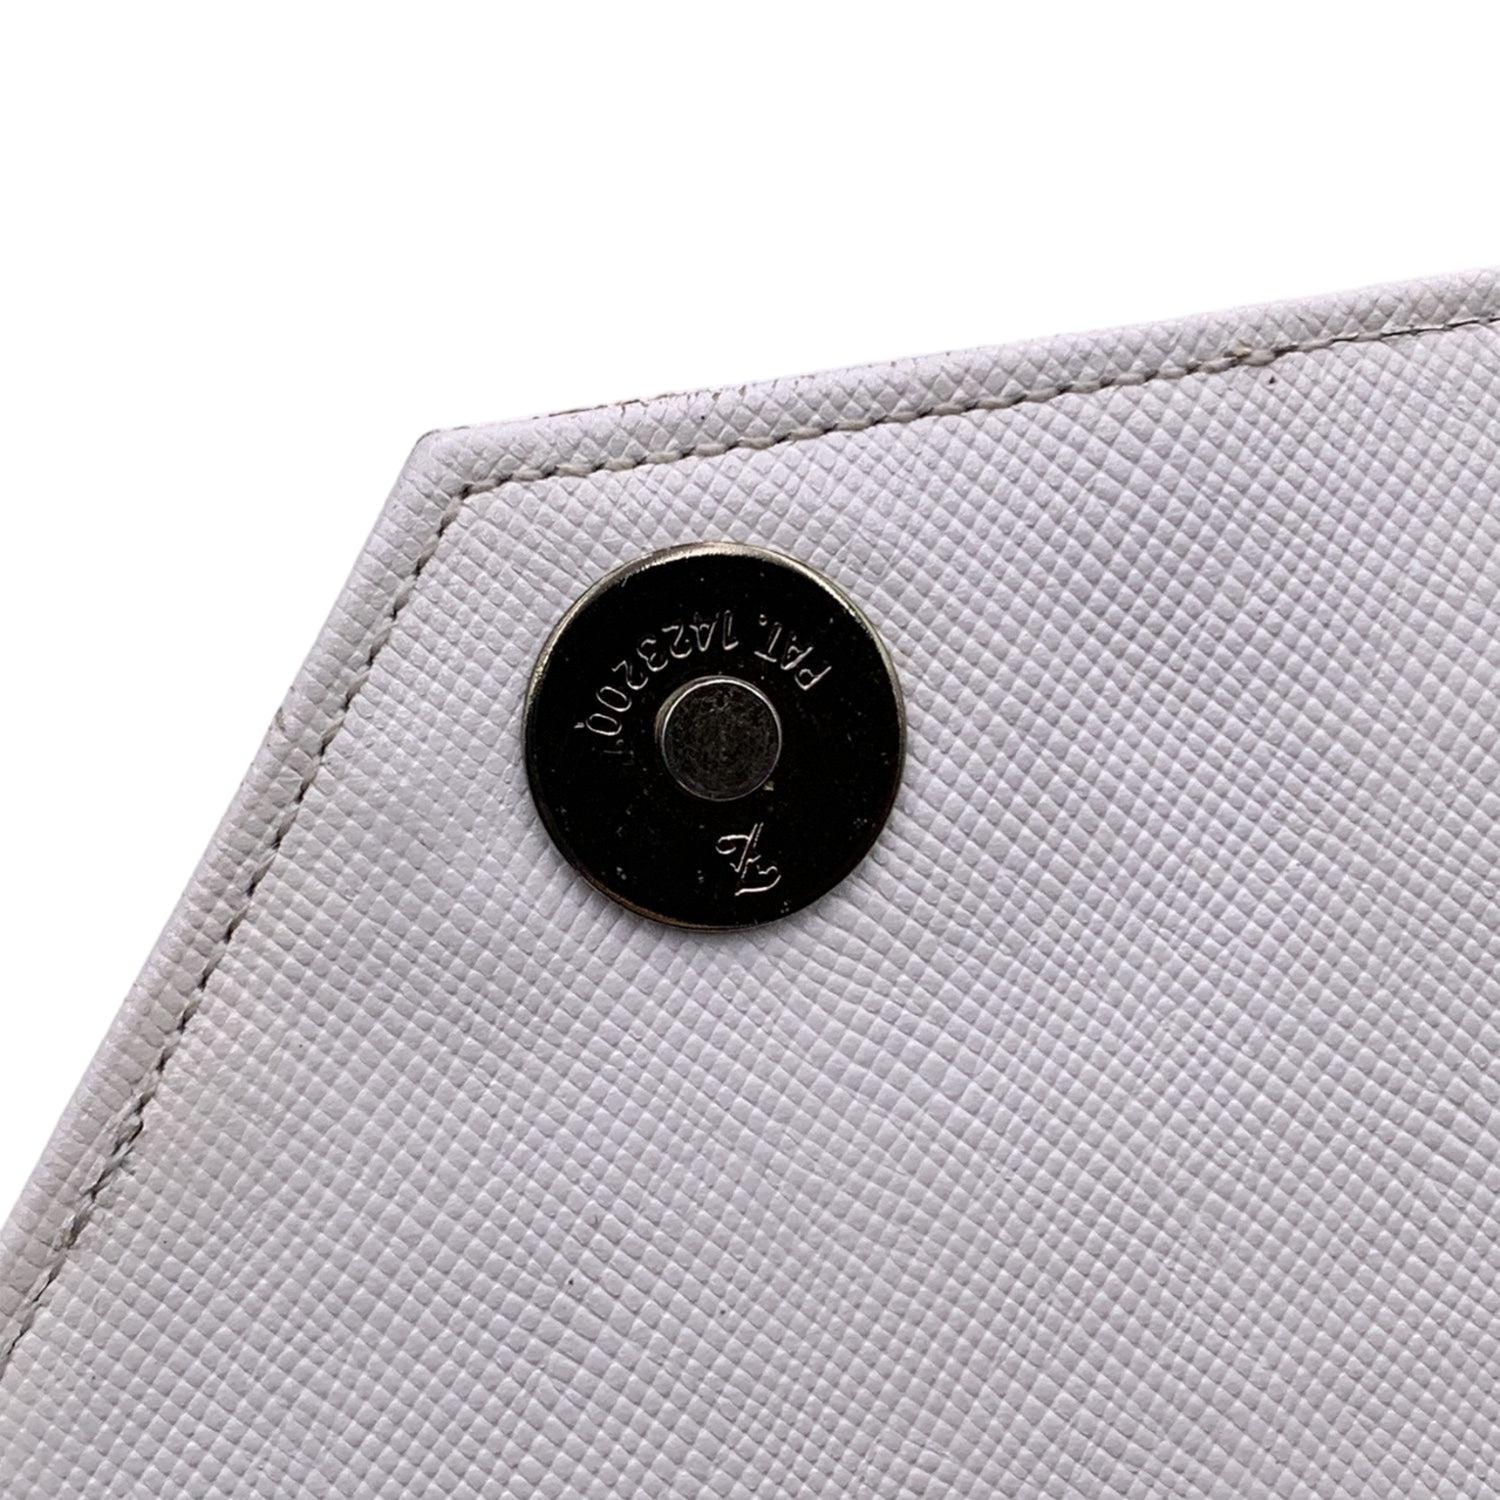 Yves Saint Laurent Vintage White Leather Handbag Clutch Bag 1